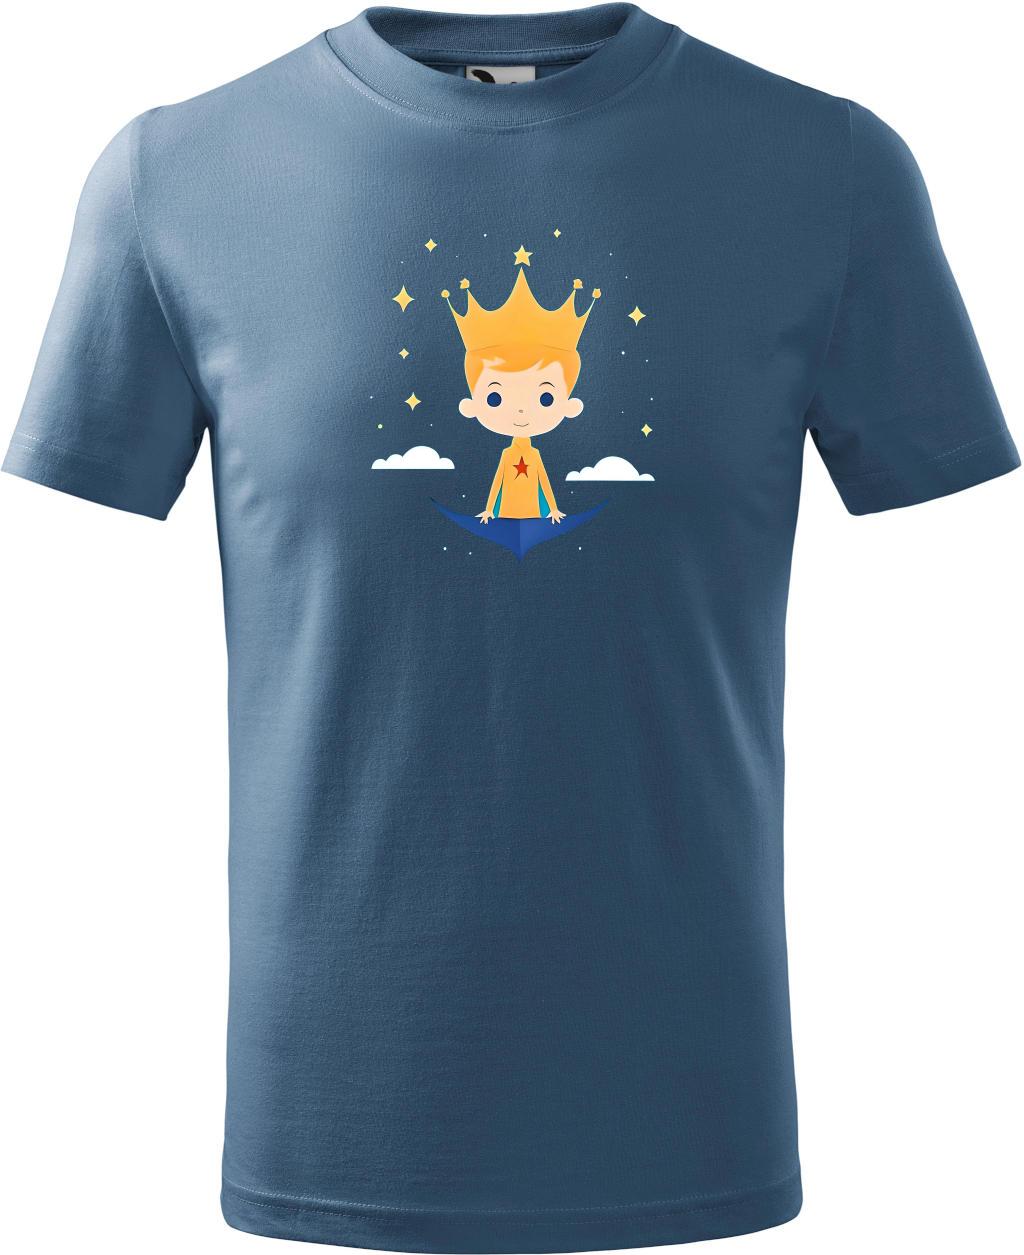 Dětské tričko Malý princ Minimal (XS) (Tričko Malý princ Minimal (XS)  demo,)